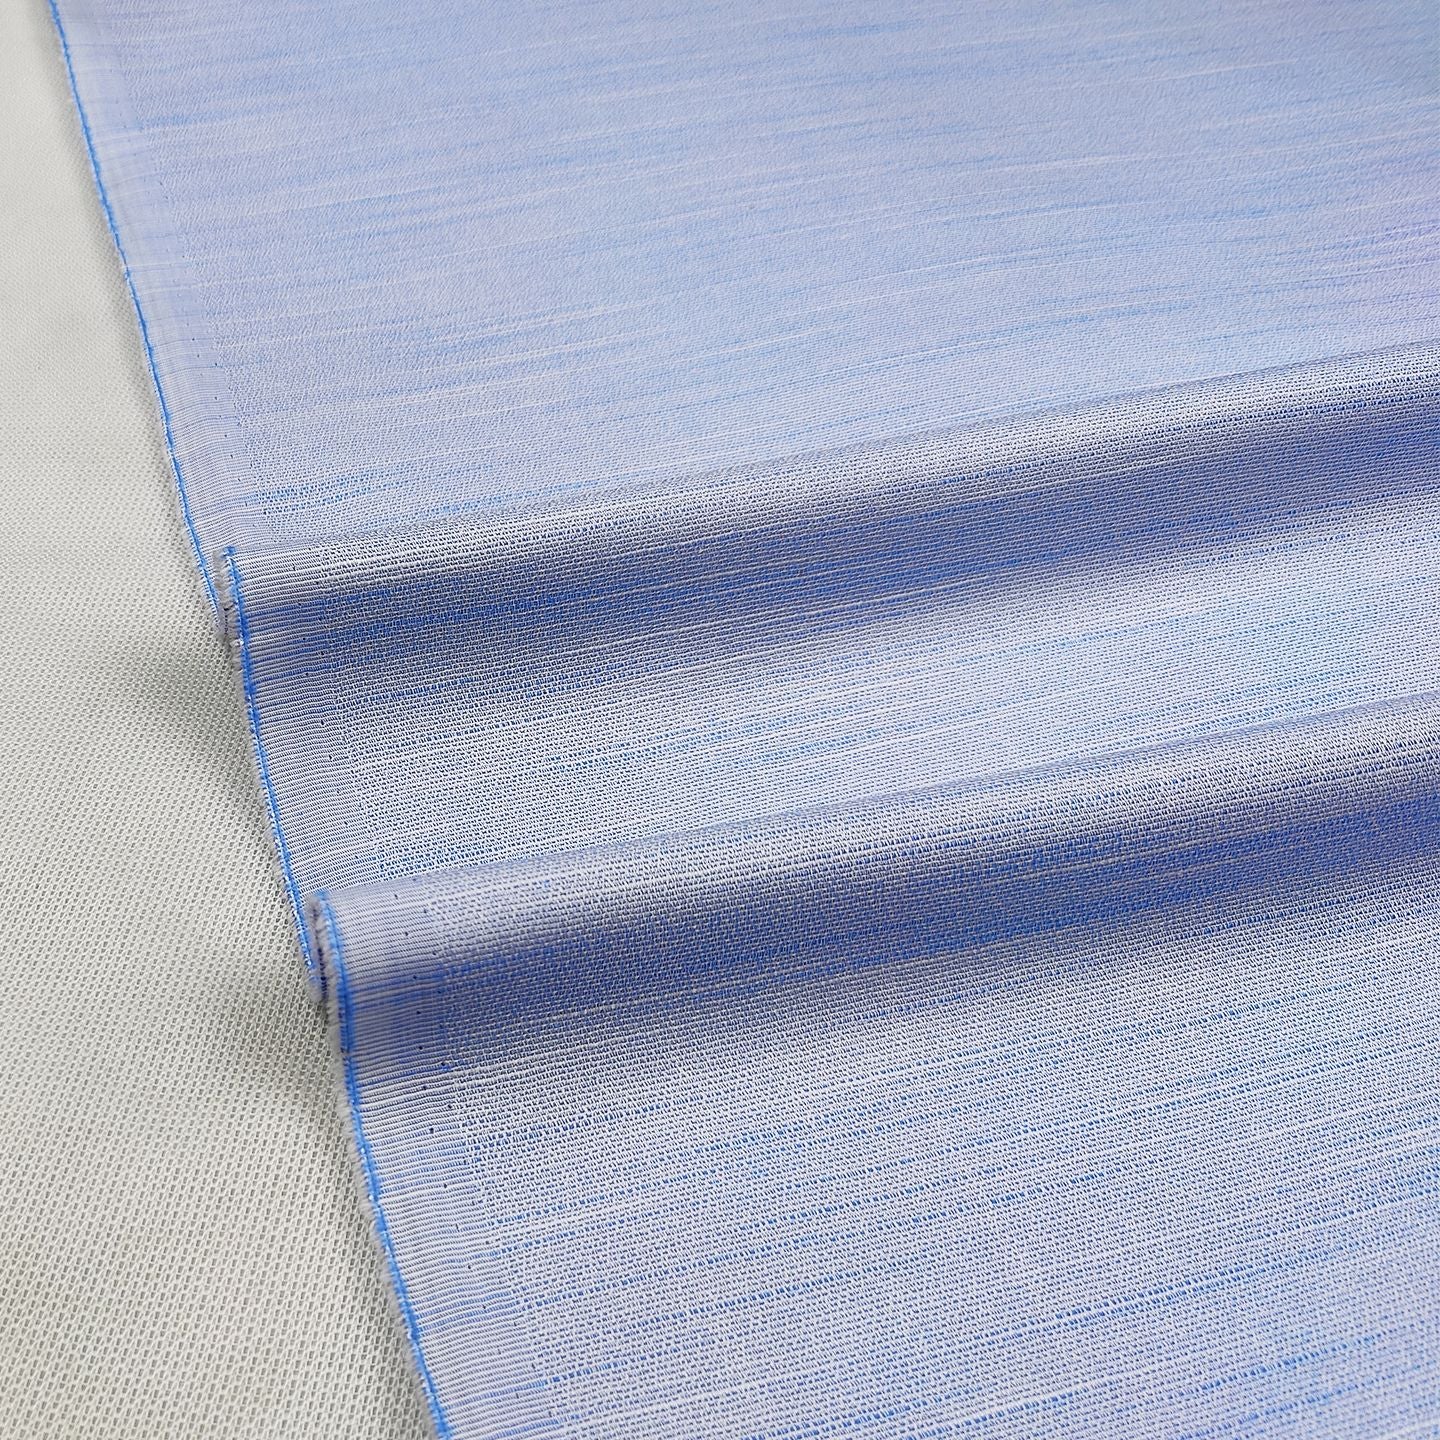 Self Blue Lining Irish kameez shalwar Fabric with Buttons & label